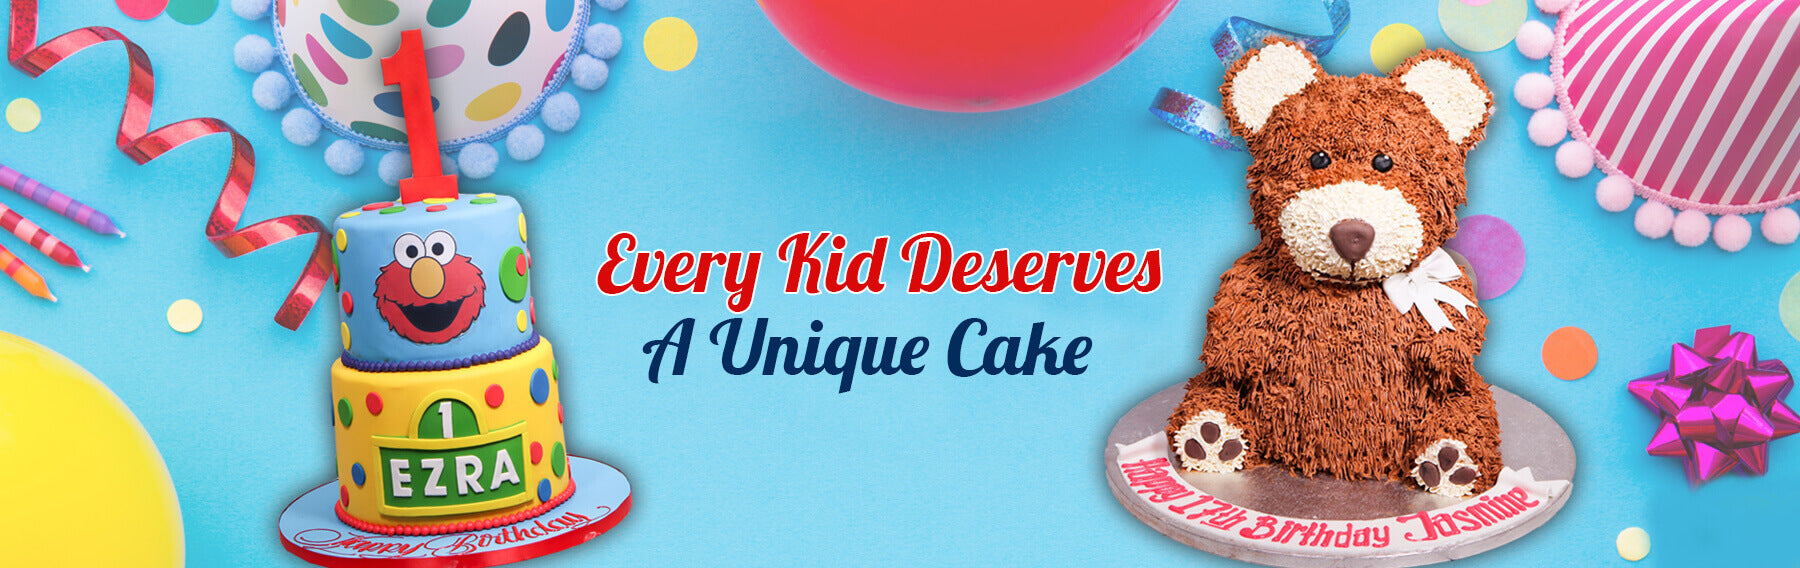 Cake Plaza zim - Baking ingredients and accesories. Visit... | Facebook